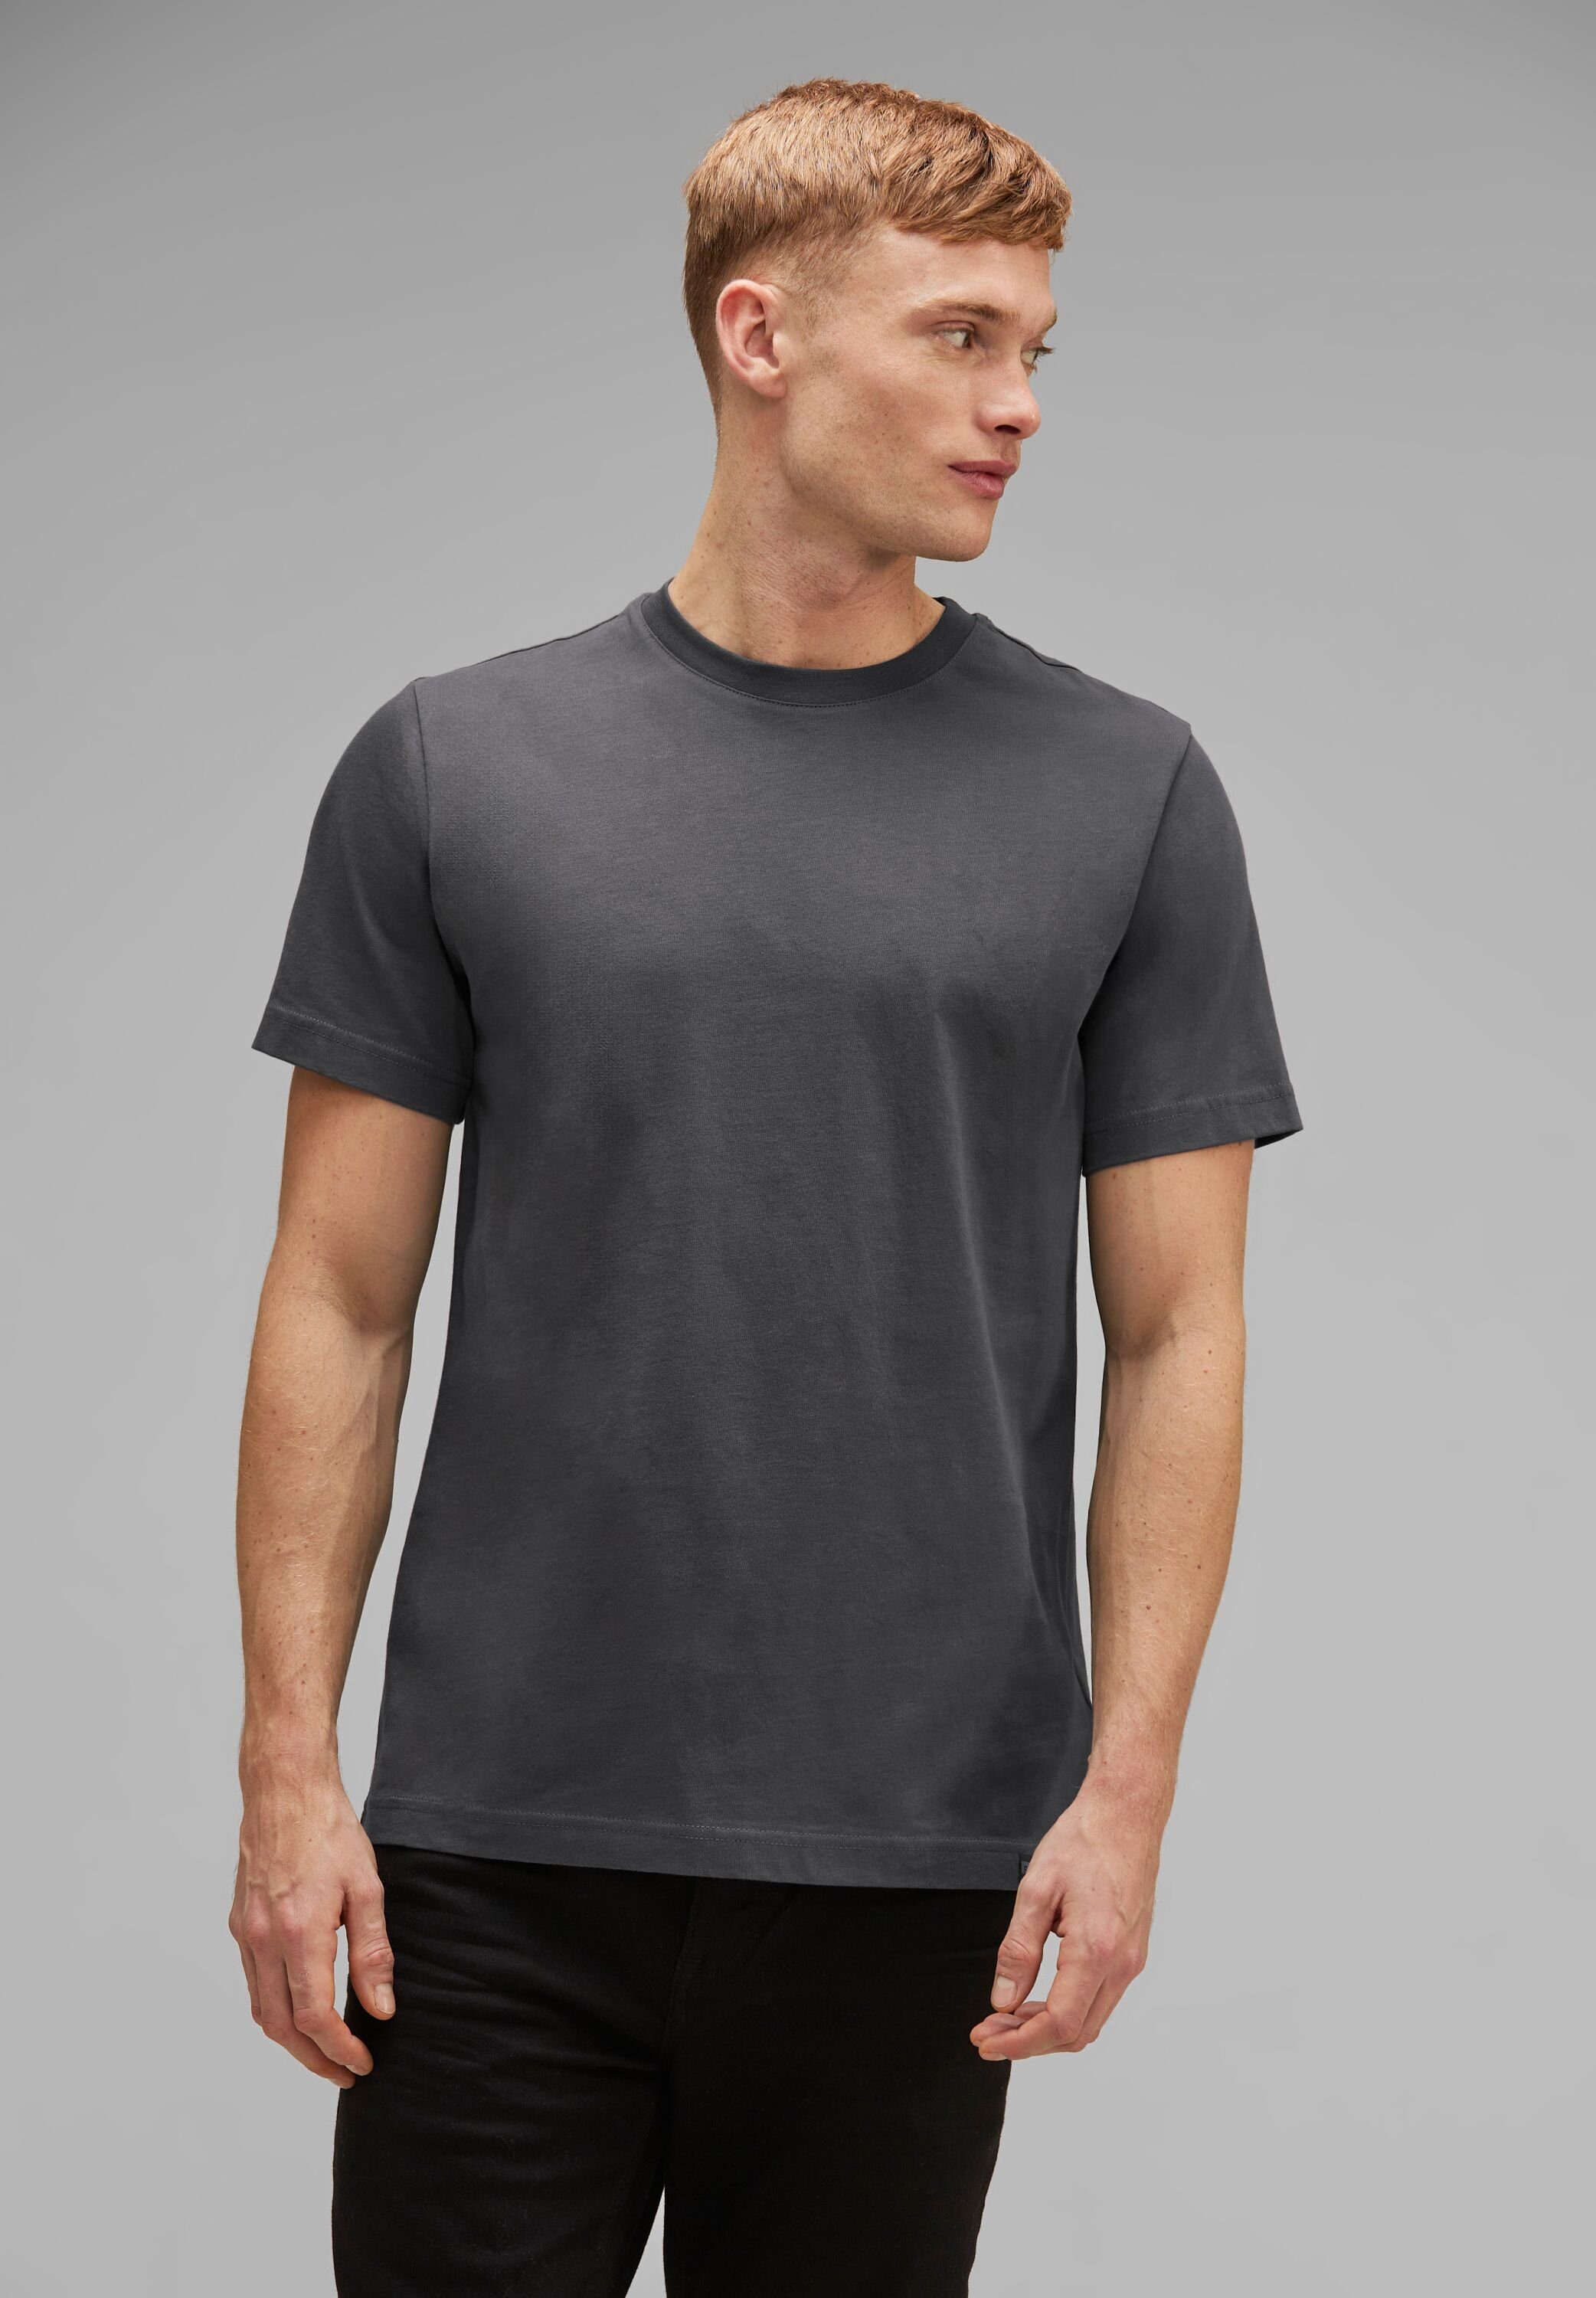 STREET Rundhalsausschnitt grey iron ONE dark MEN T-Shirt